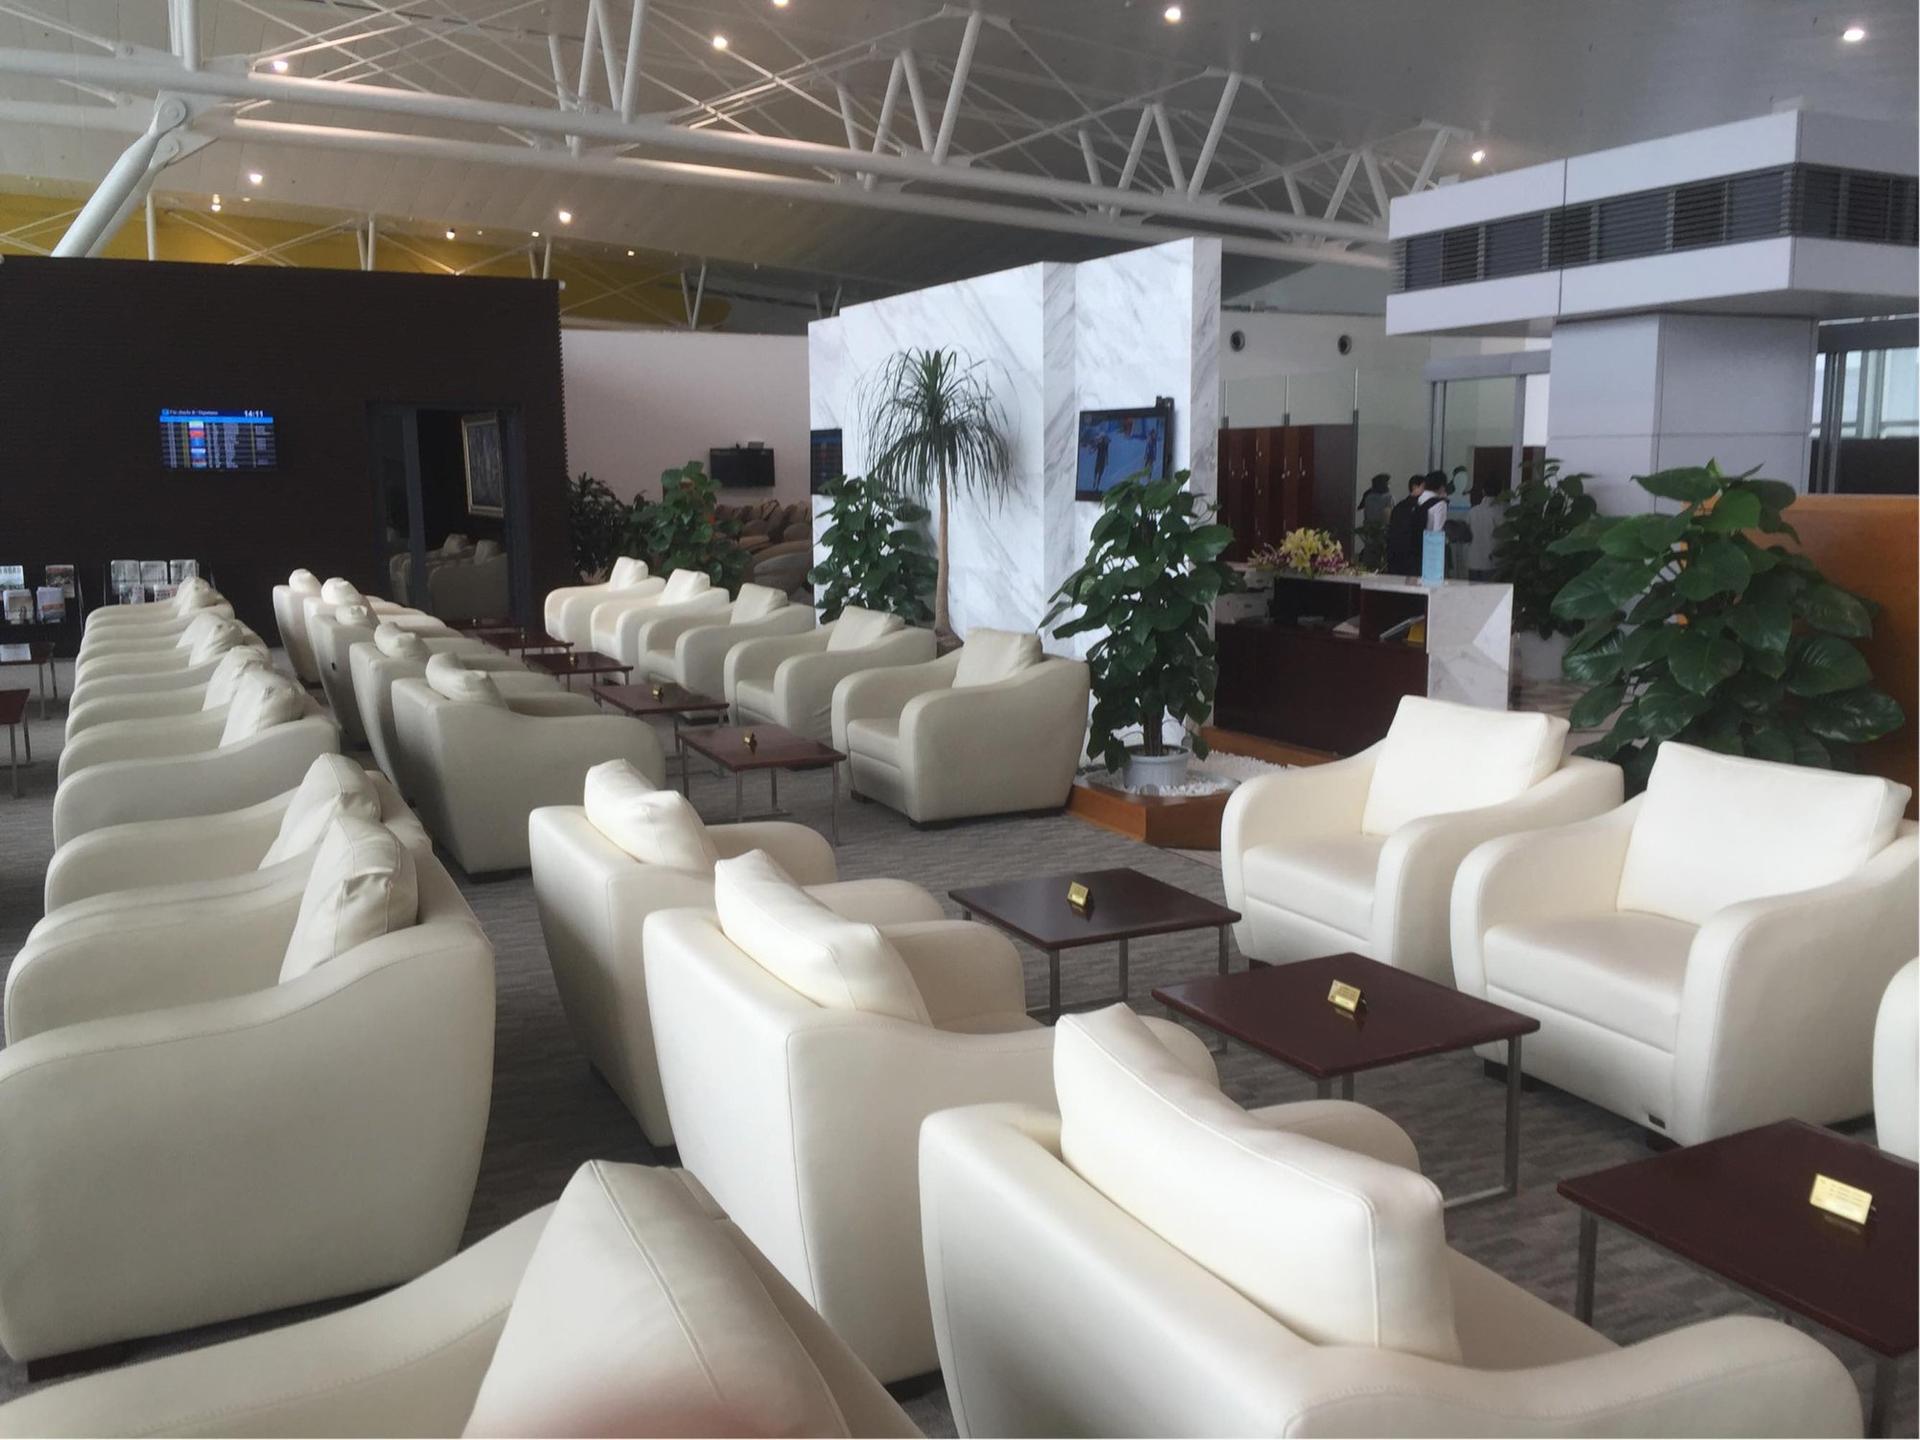 Noi Bai International Airport Business Lounge image 12 of 26